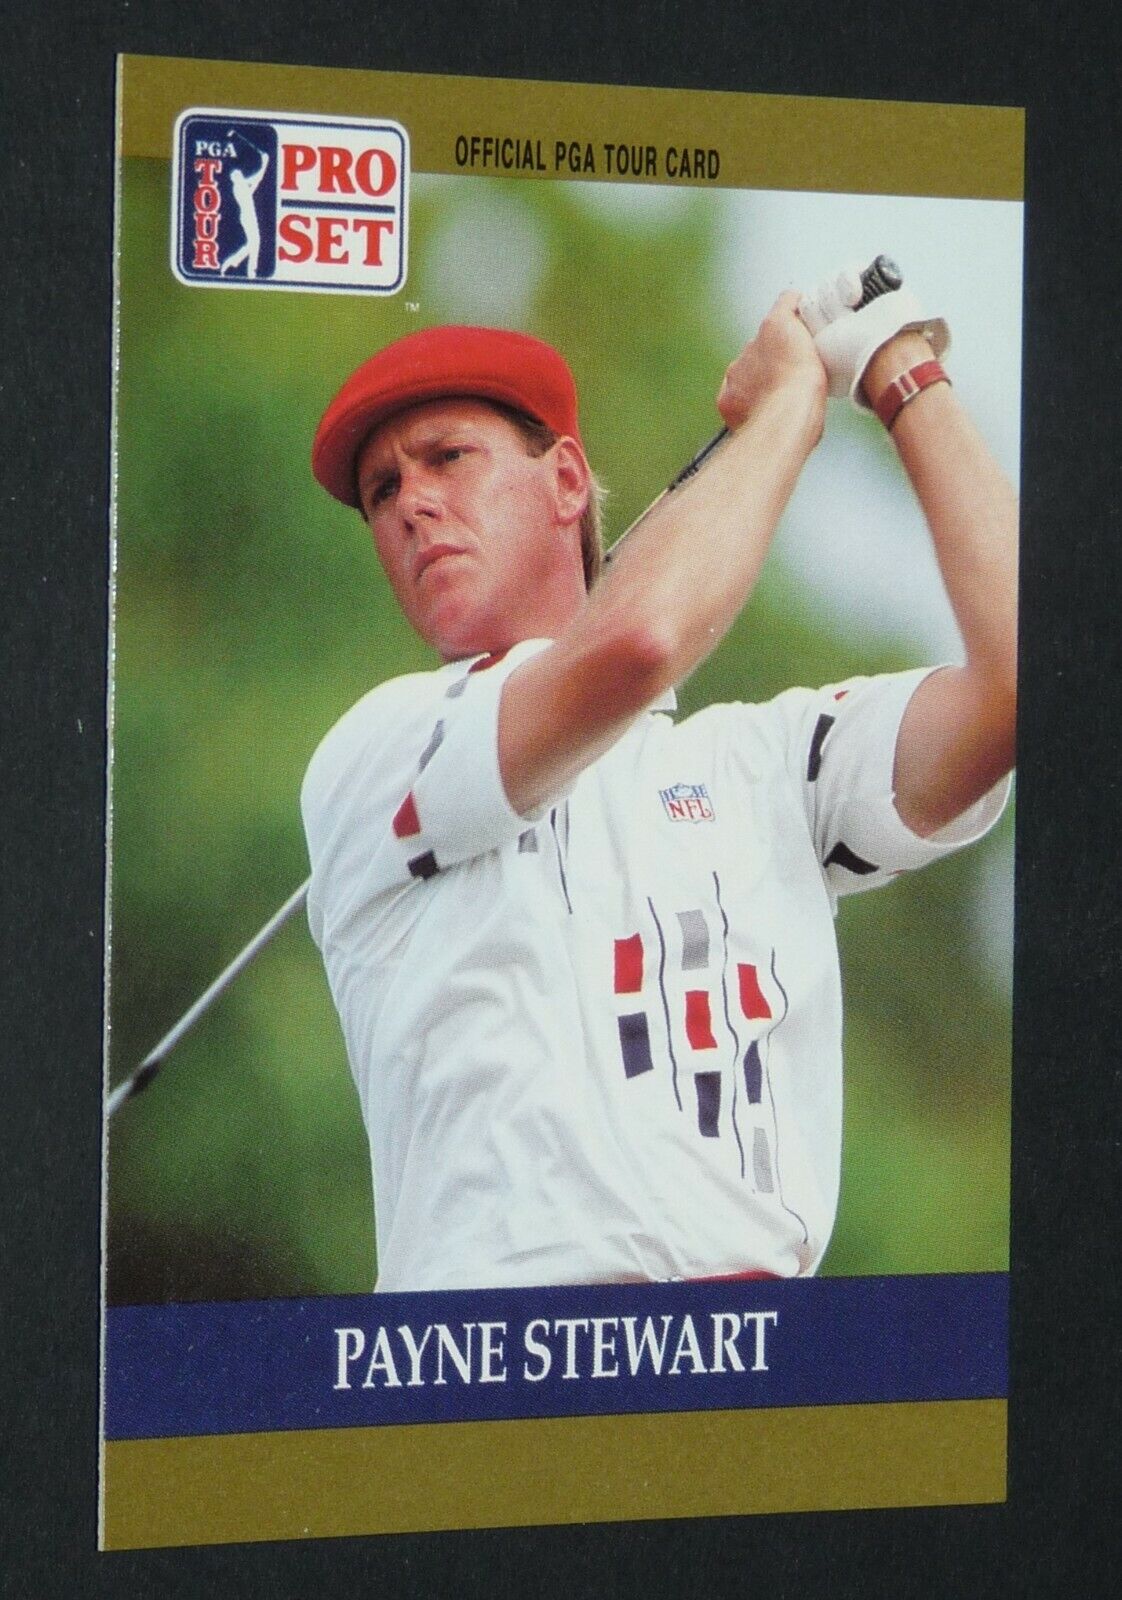 #20 PAYNE STEWART USA PRO SET CARD GOLF 1990 PGA TOUR GOLFING GOLFER USPGA